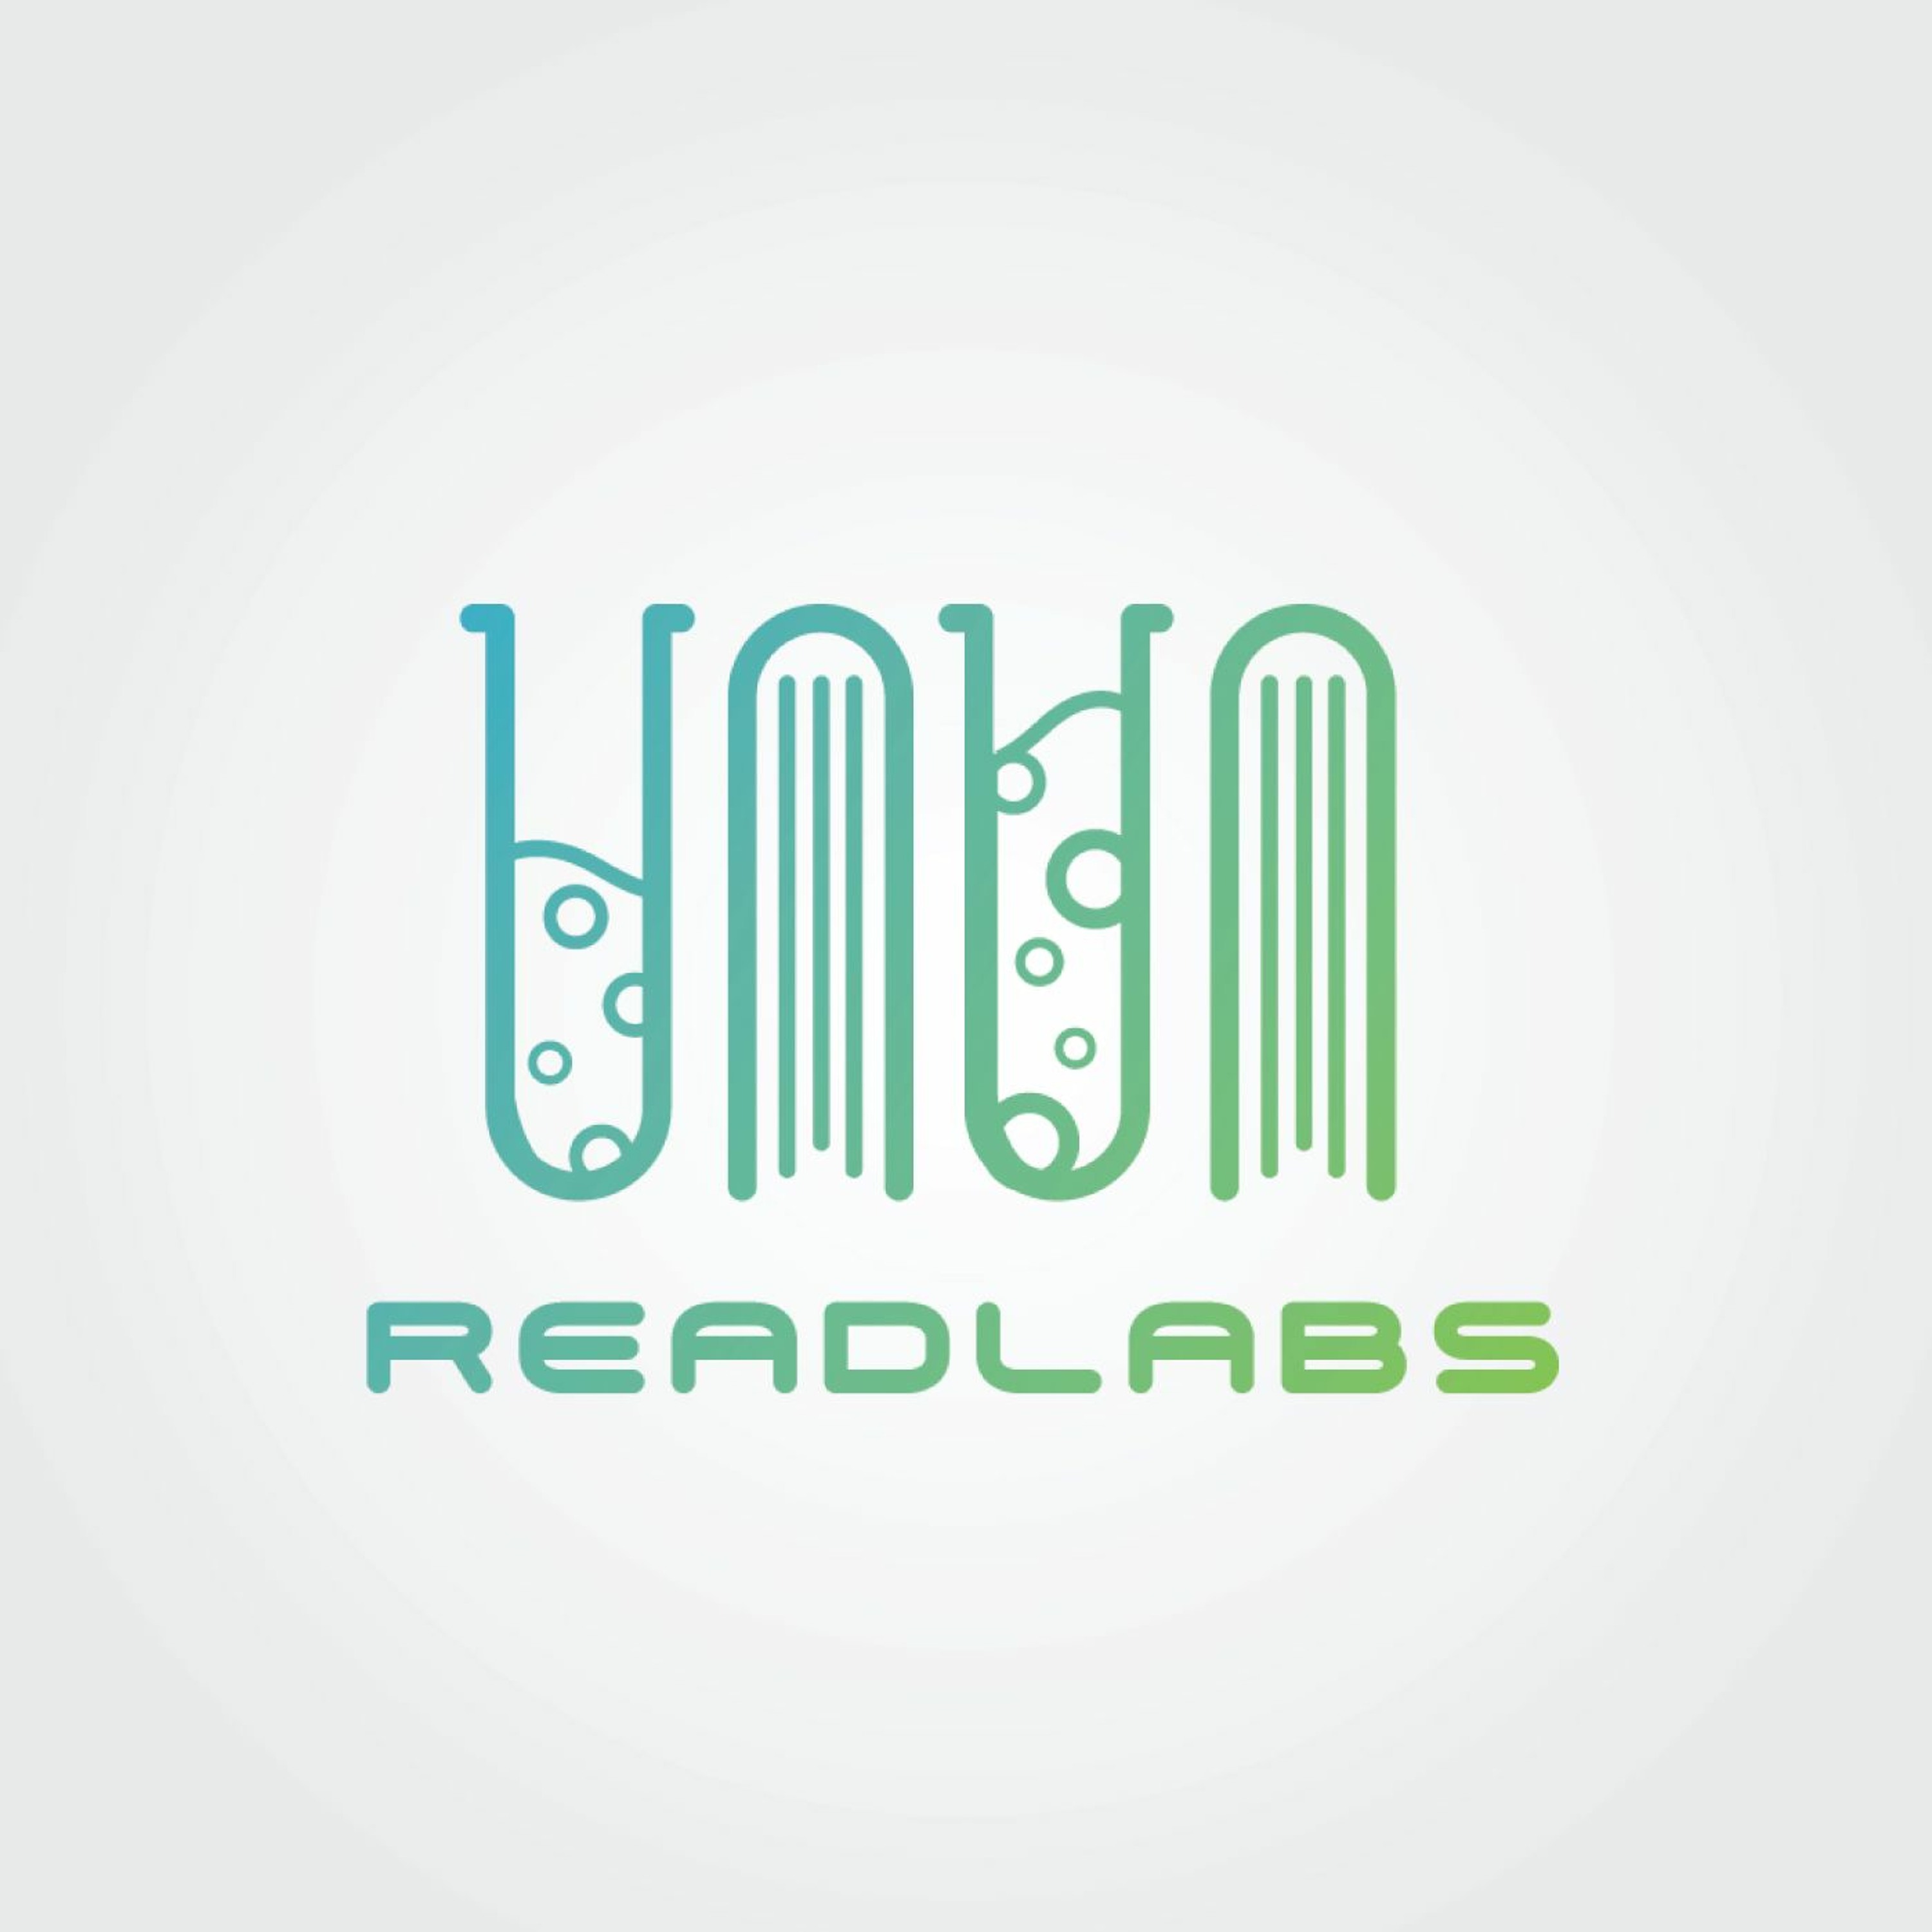 RL00 : แนะนำ Readlabs podcast ใหม่ ใน concept การอ่านคือการทดลองของชีวิต